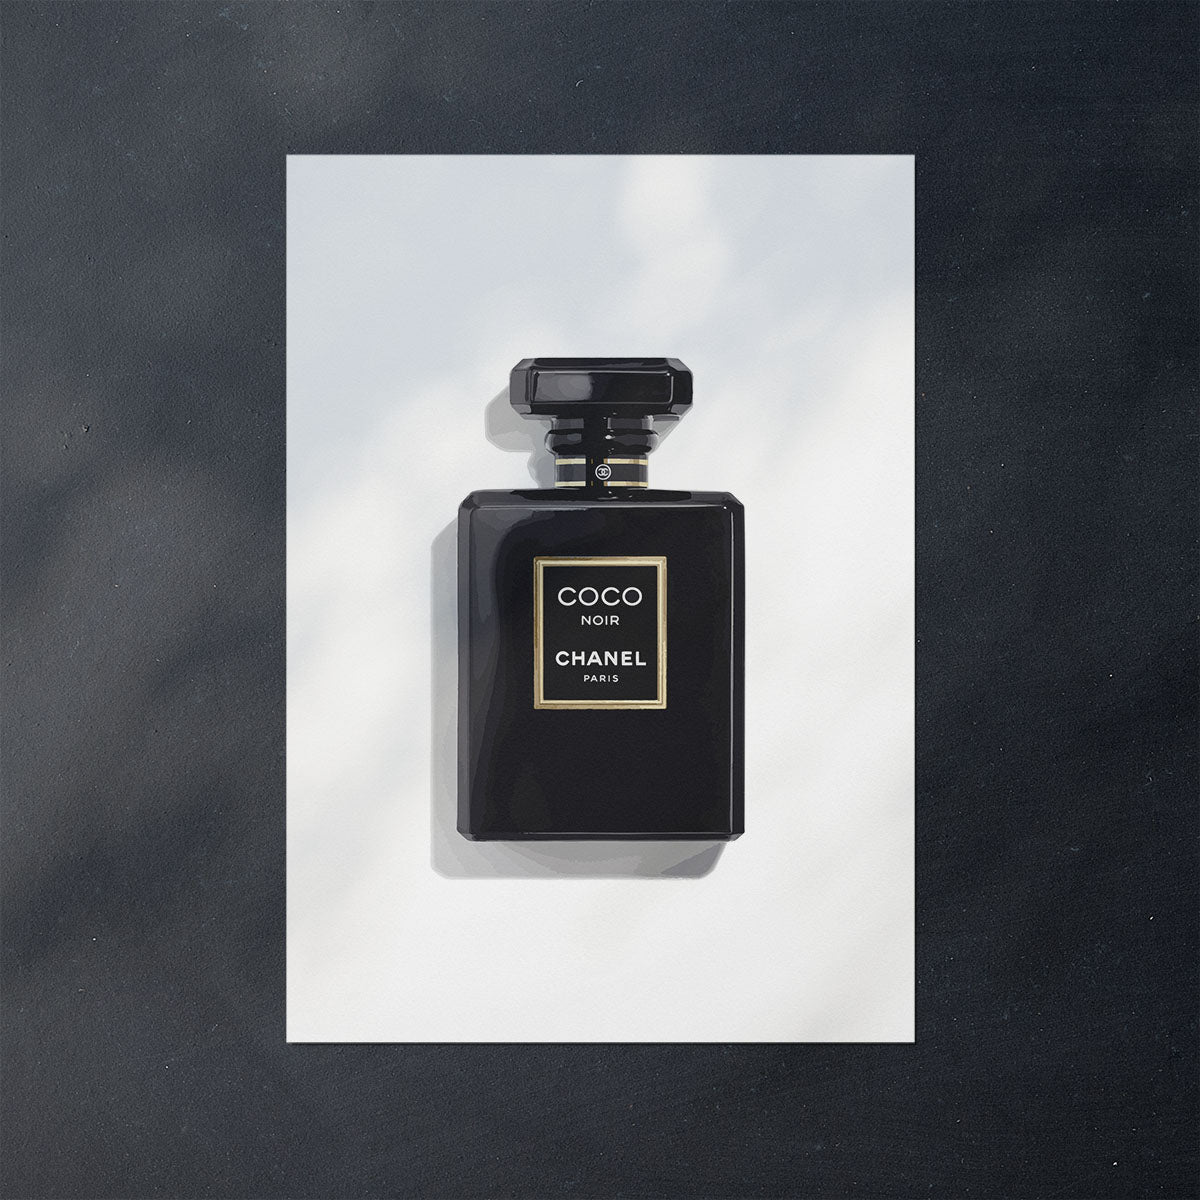 Coco Chanel Perfume Bottle Print  Black & White Perfume Poster